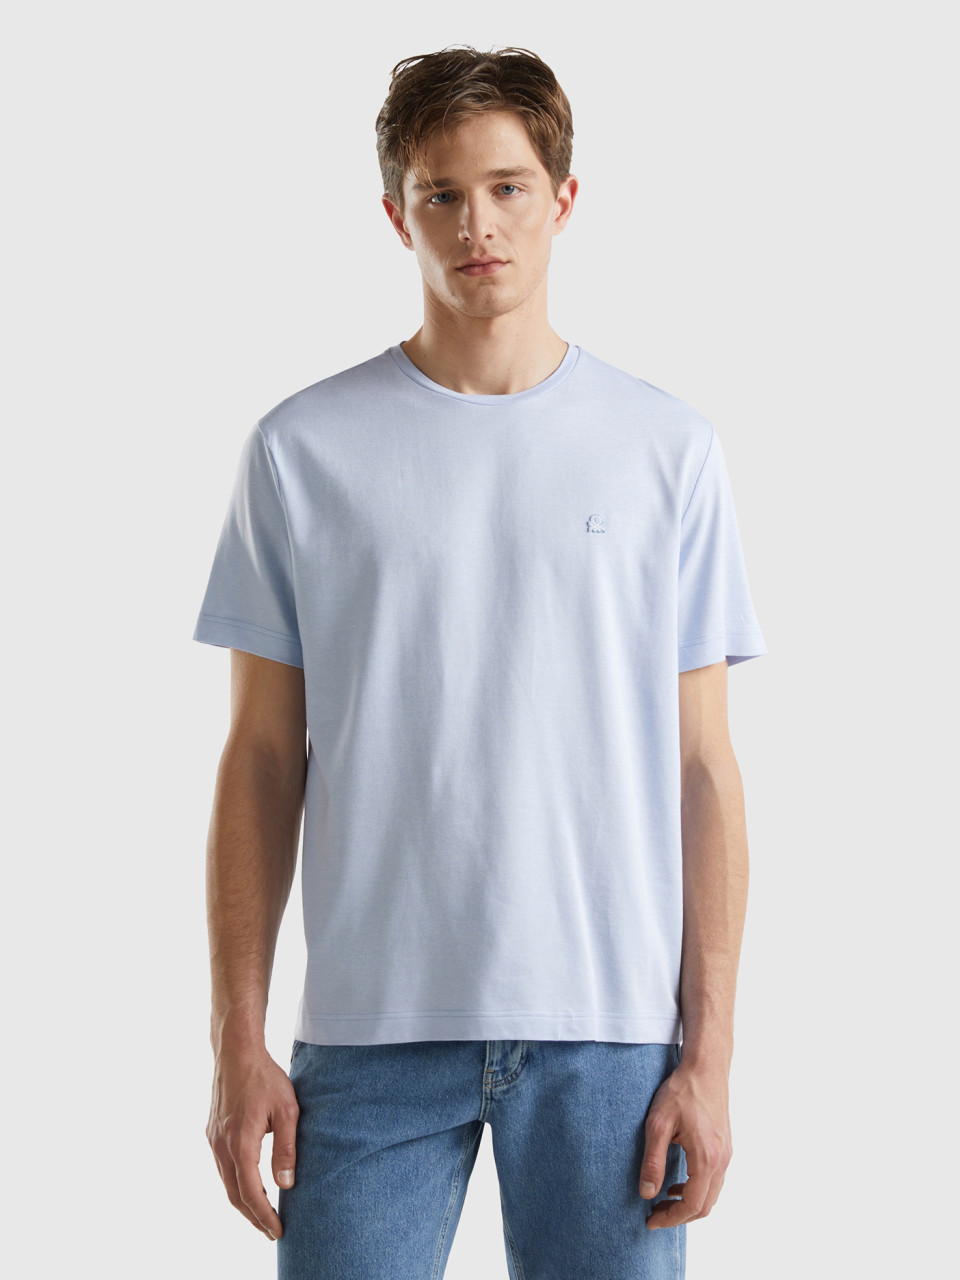 Benetton, Mikro-piqué-shirt, Blassblau, male